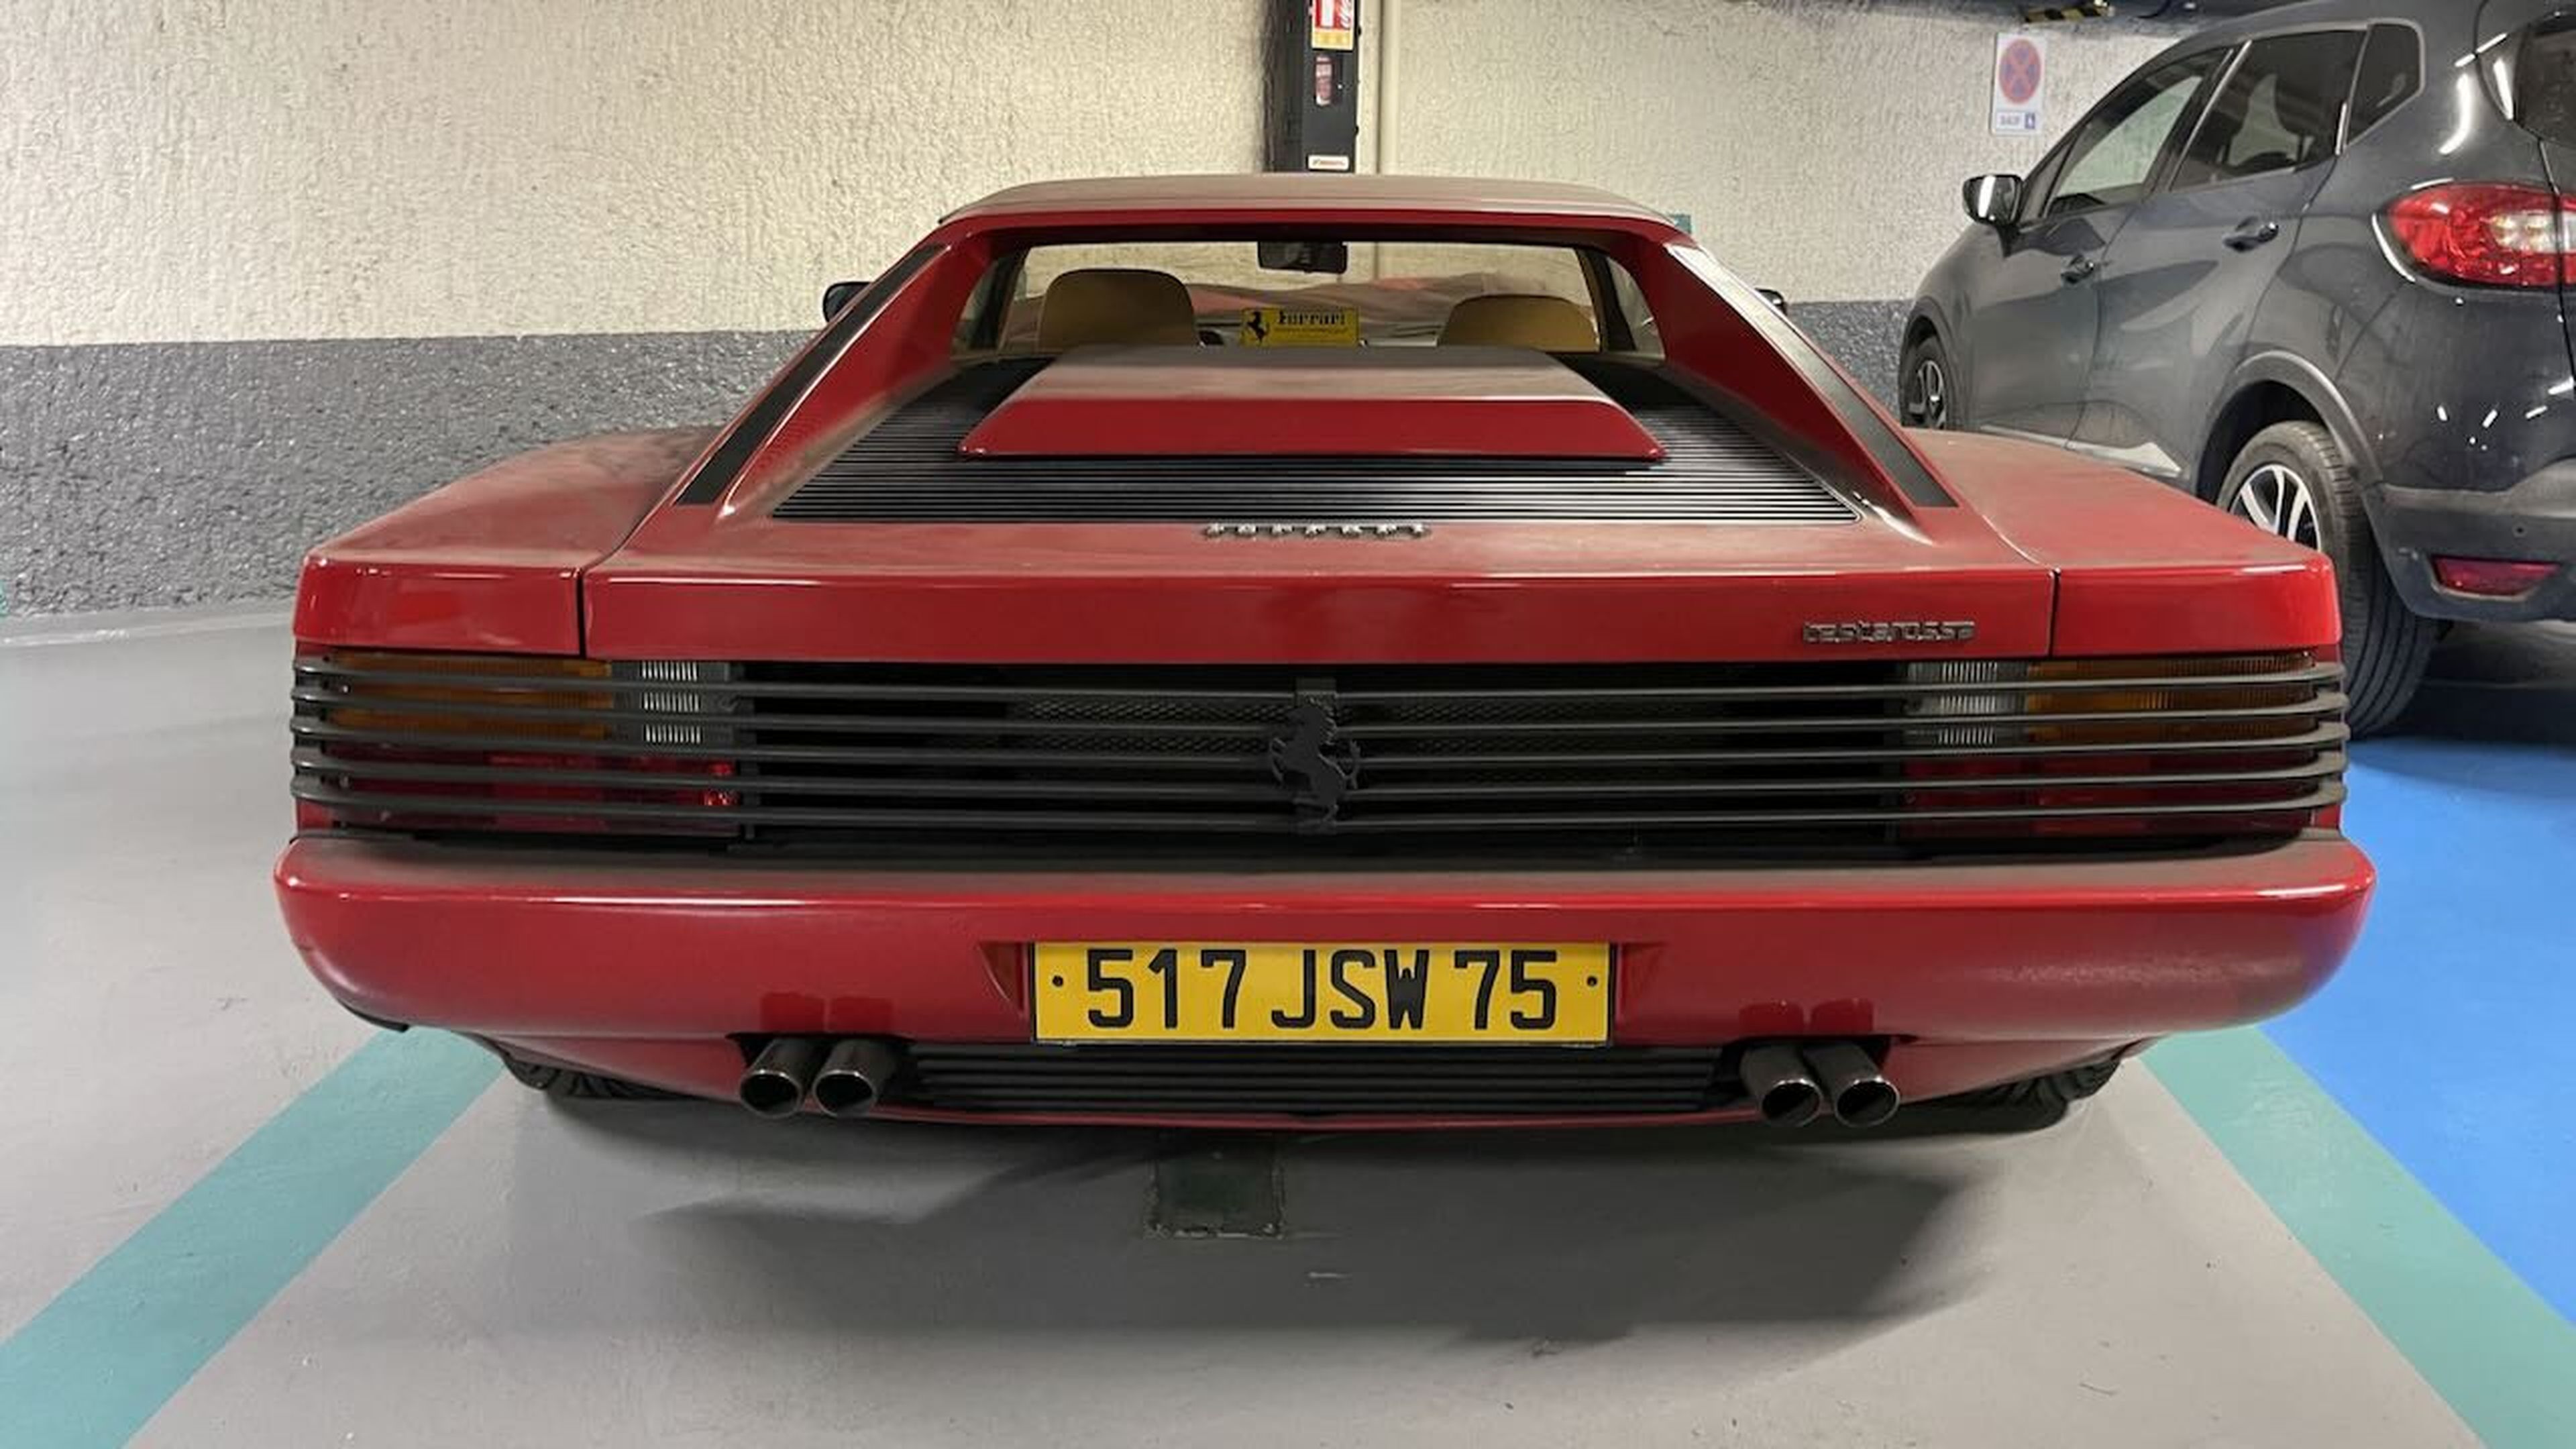 Ferrari Testarossa abandonado durante casi 20 años